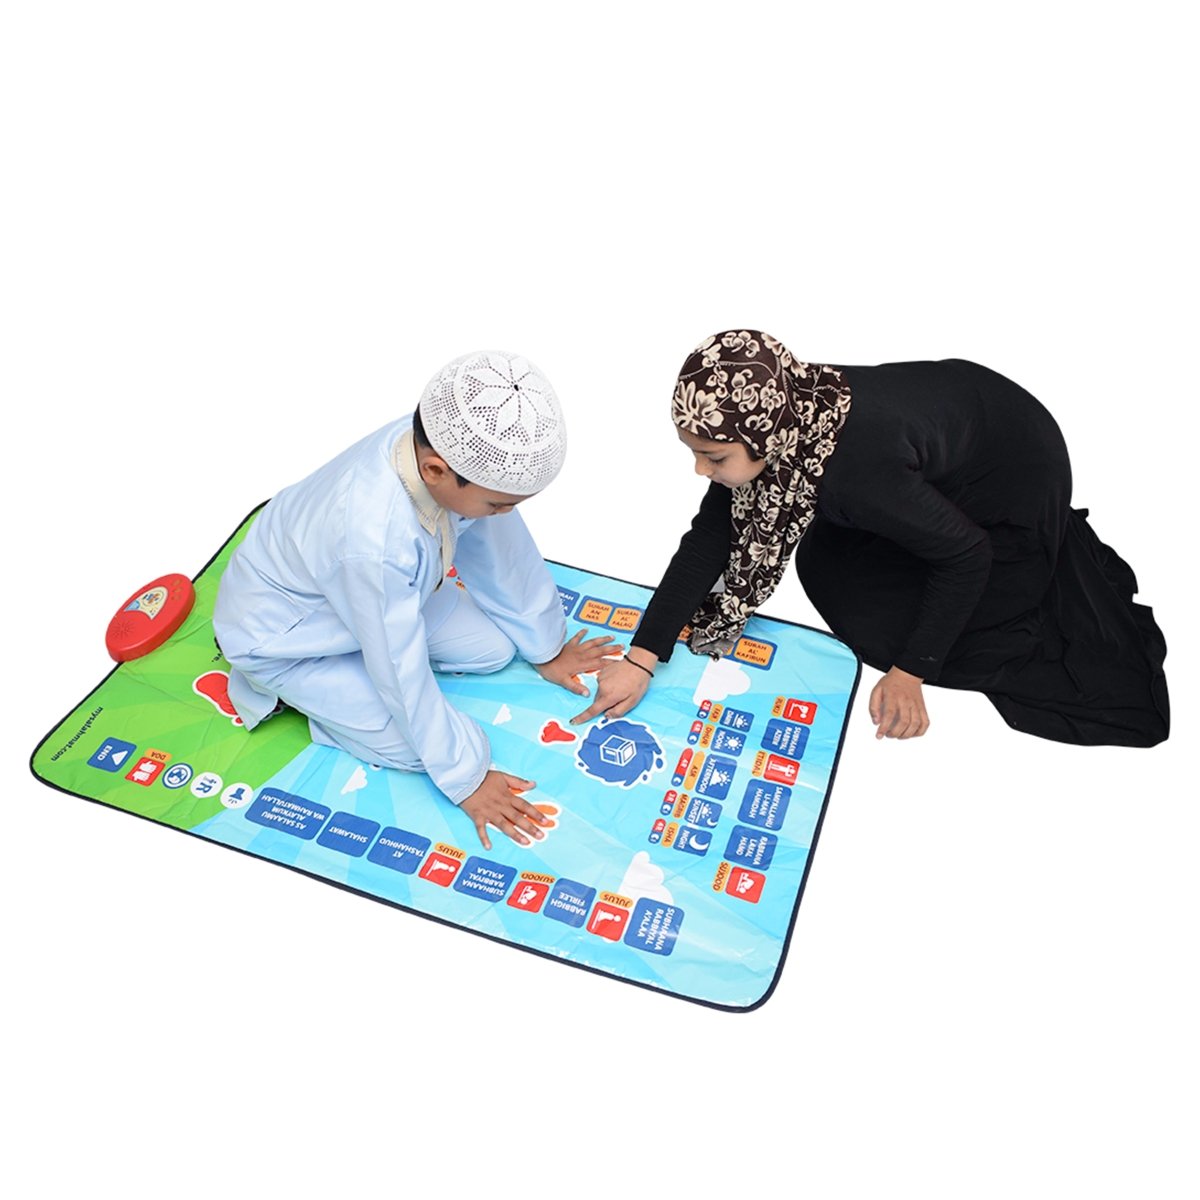 NEW - My Salah Mat - Educational Interactive Prayer Mat - Divinity Collection